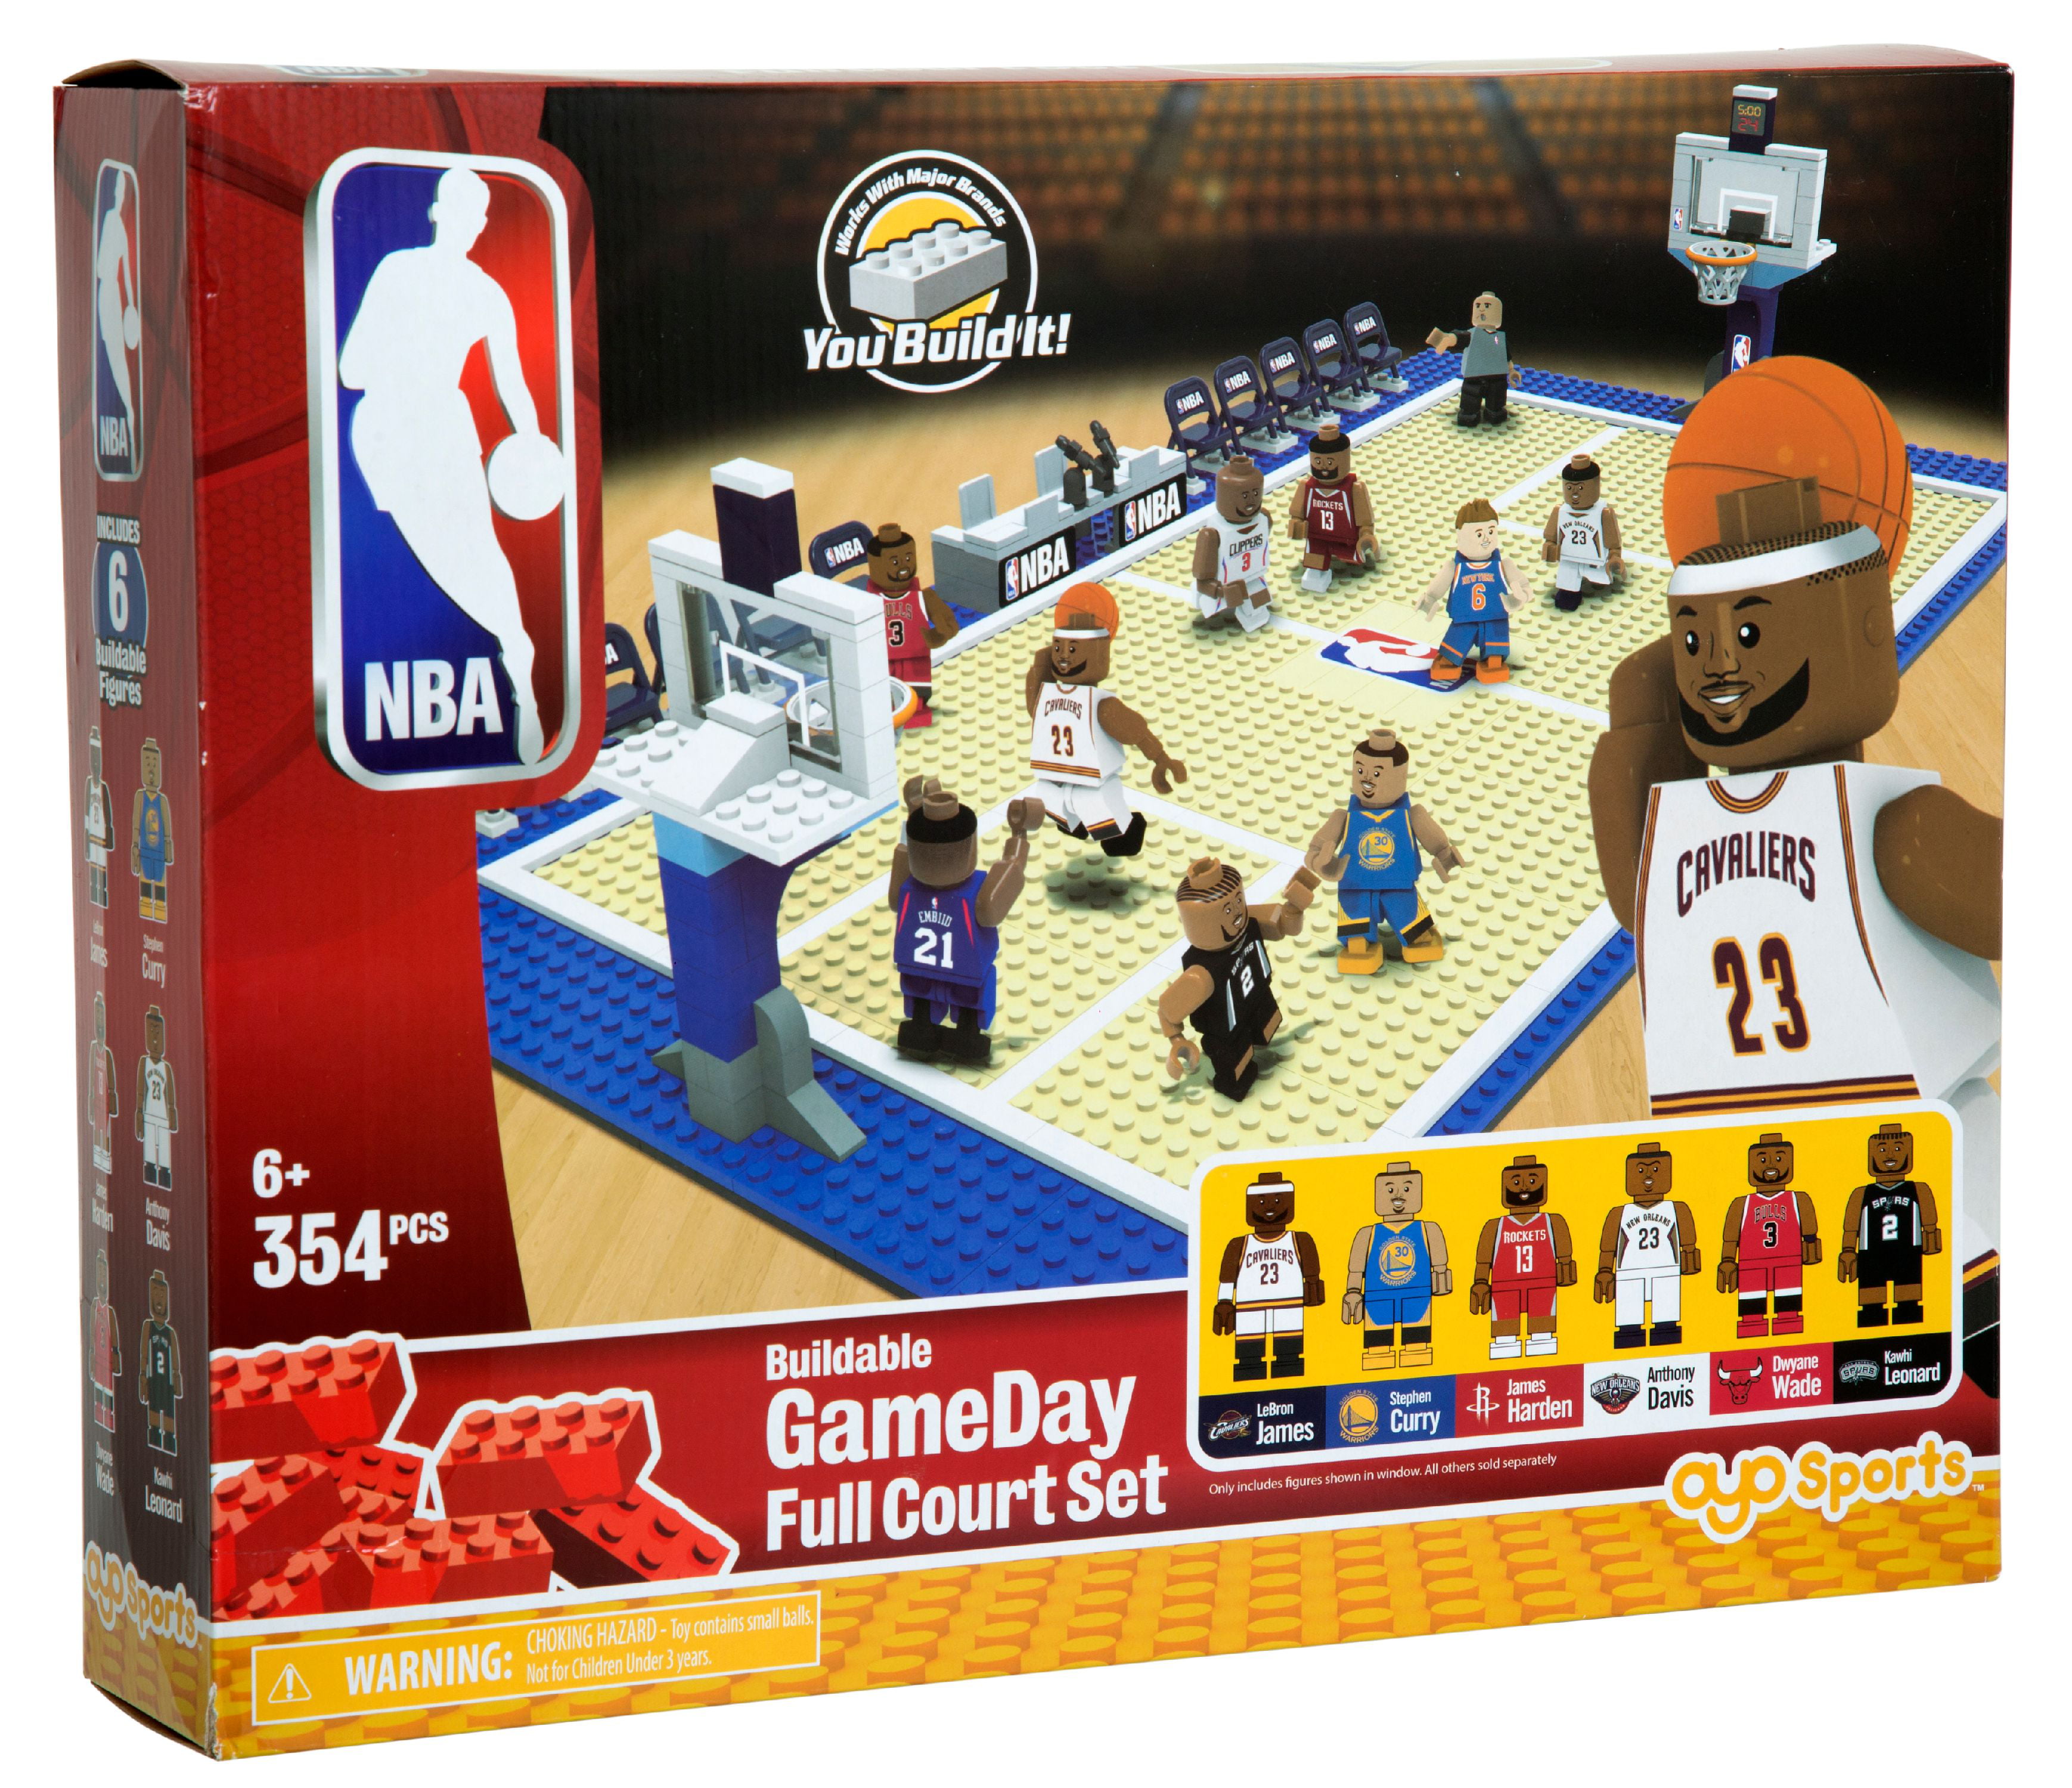 NBA Elite Edition Full Court Construction Set - Includes Mini-Figure Players